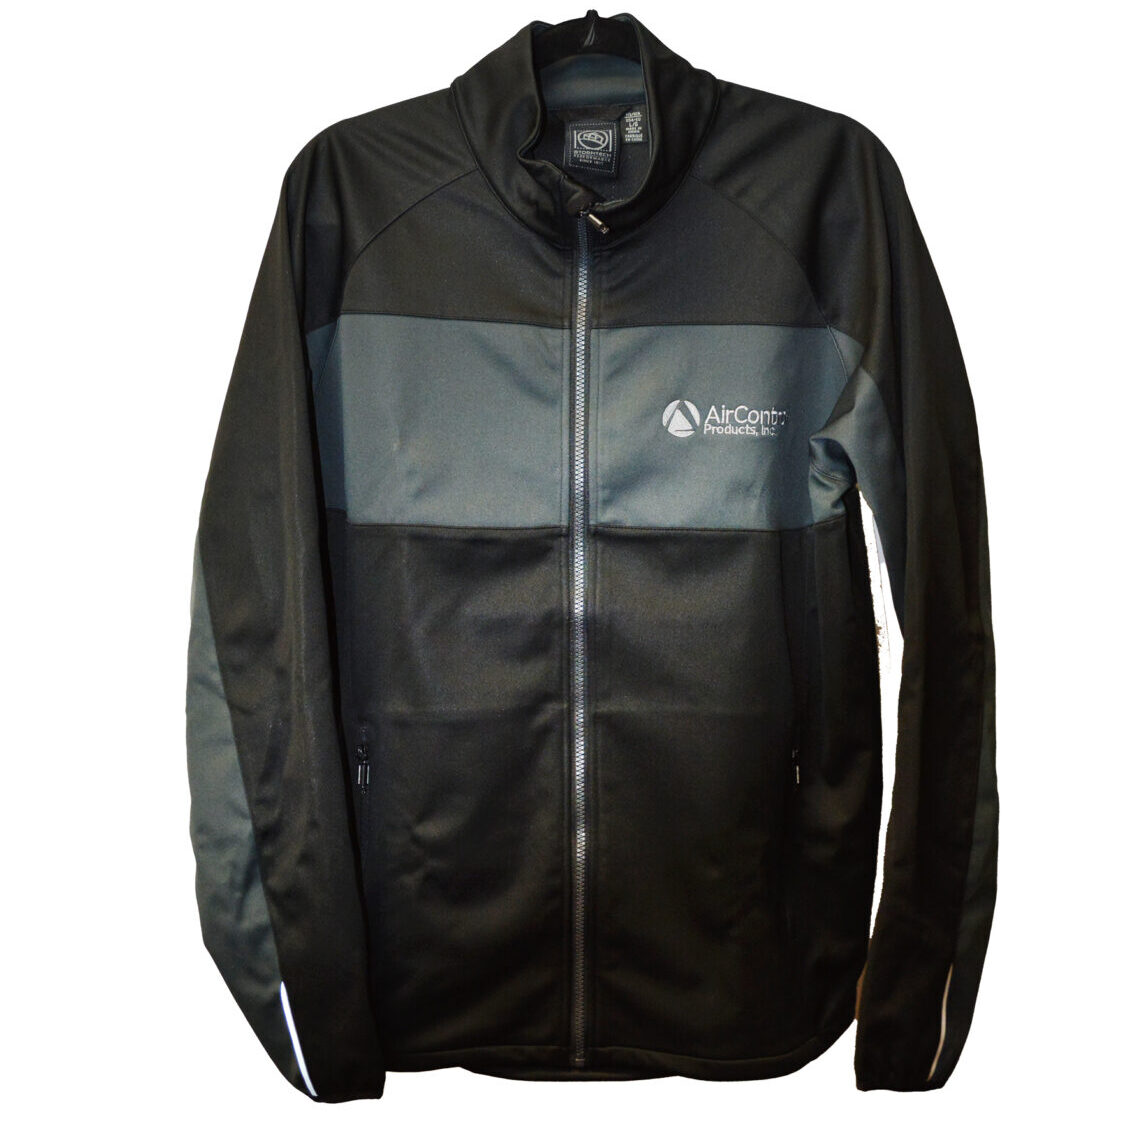 (33) Sportech Jacket Blk/Grey Qty: 1-L $60